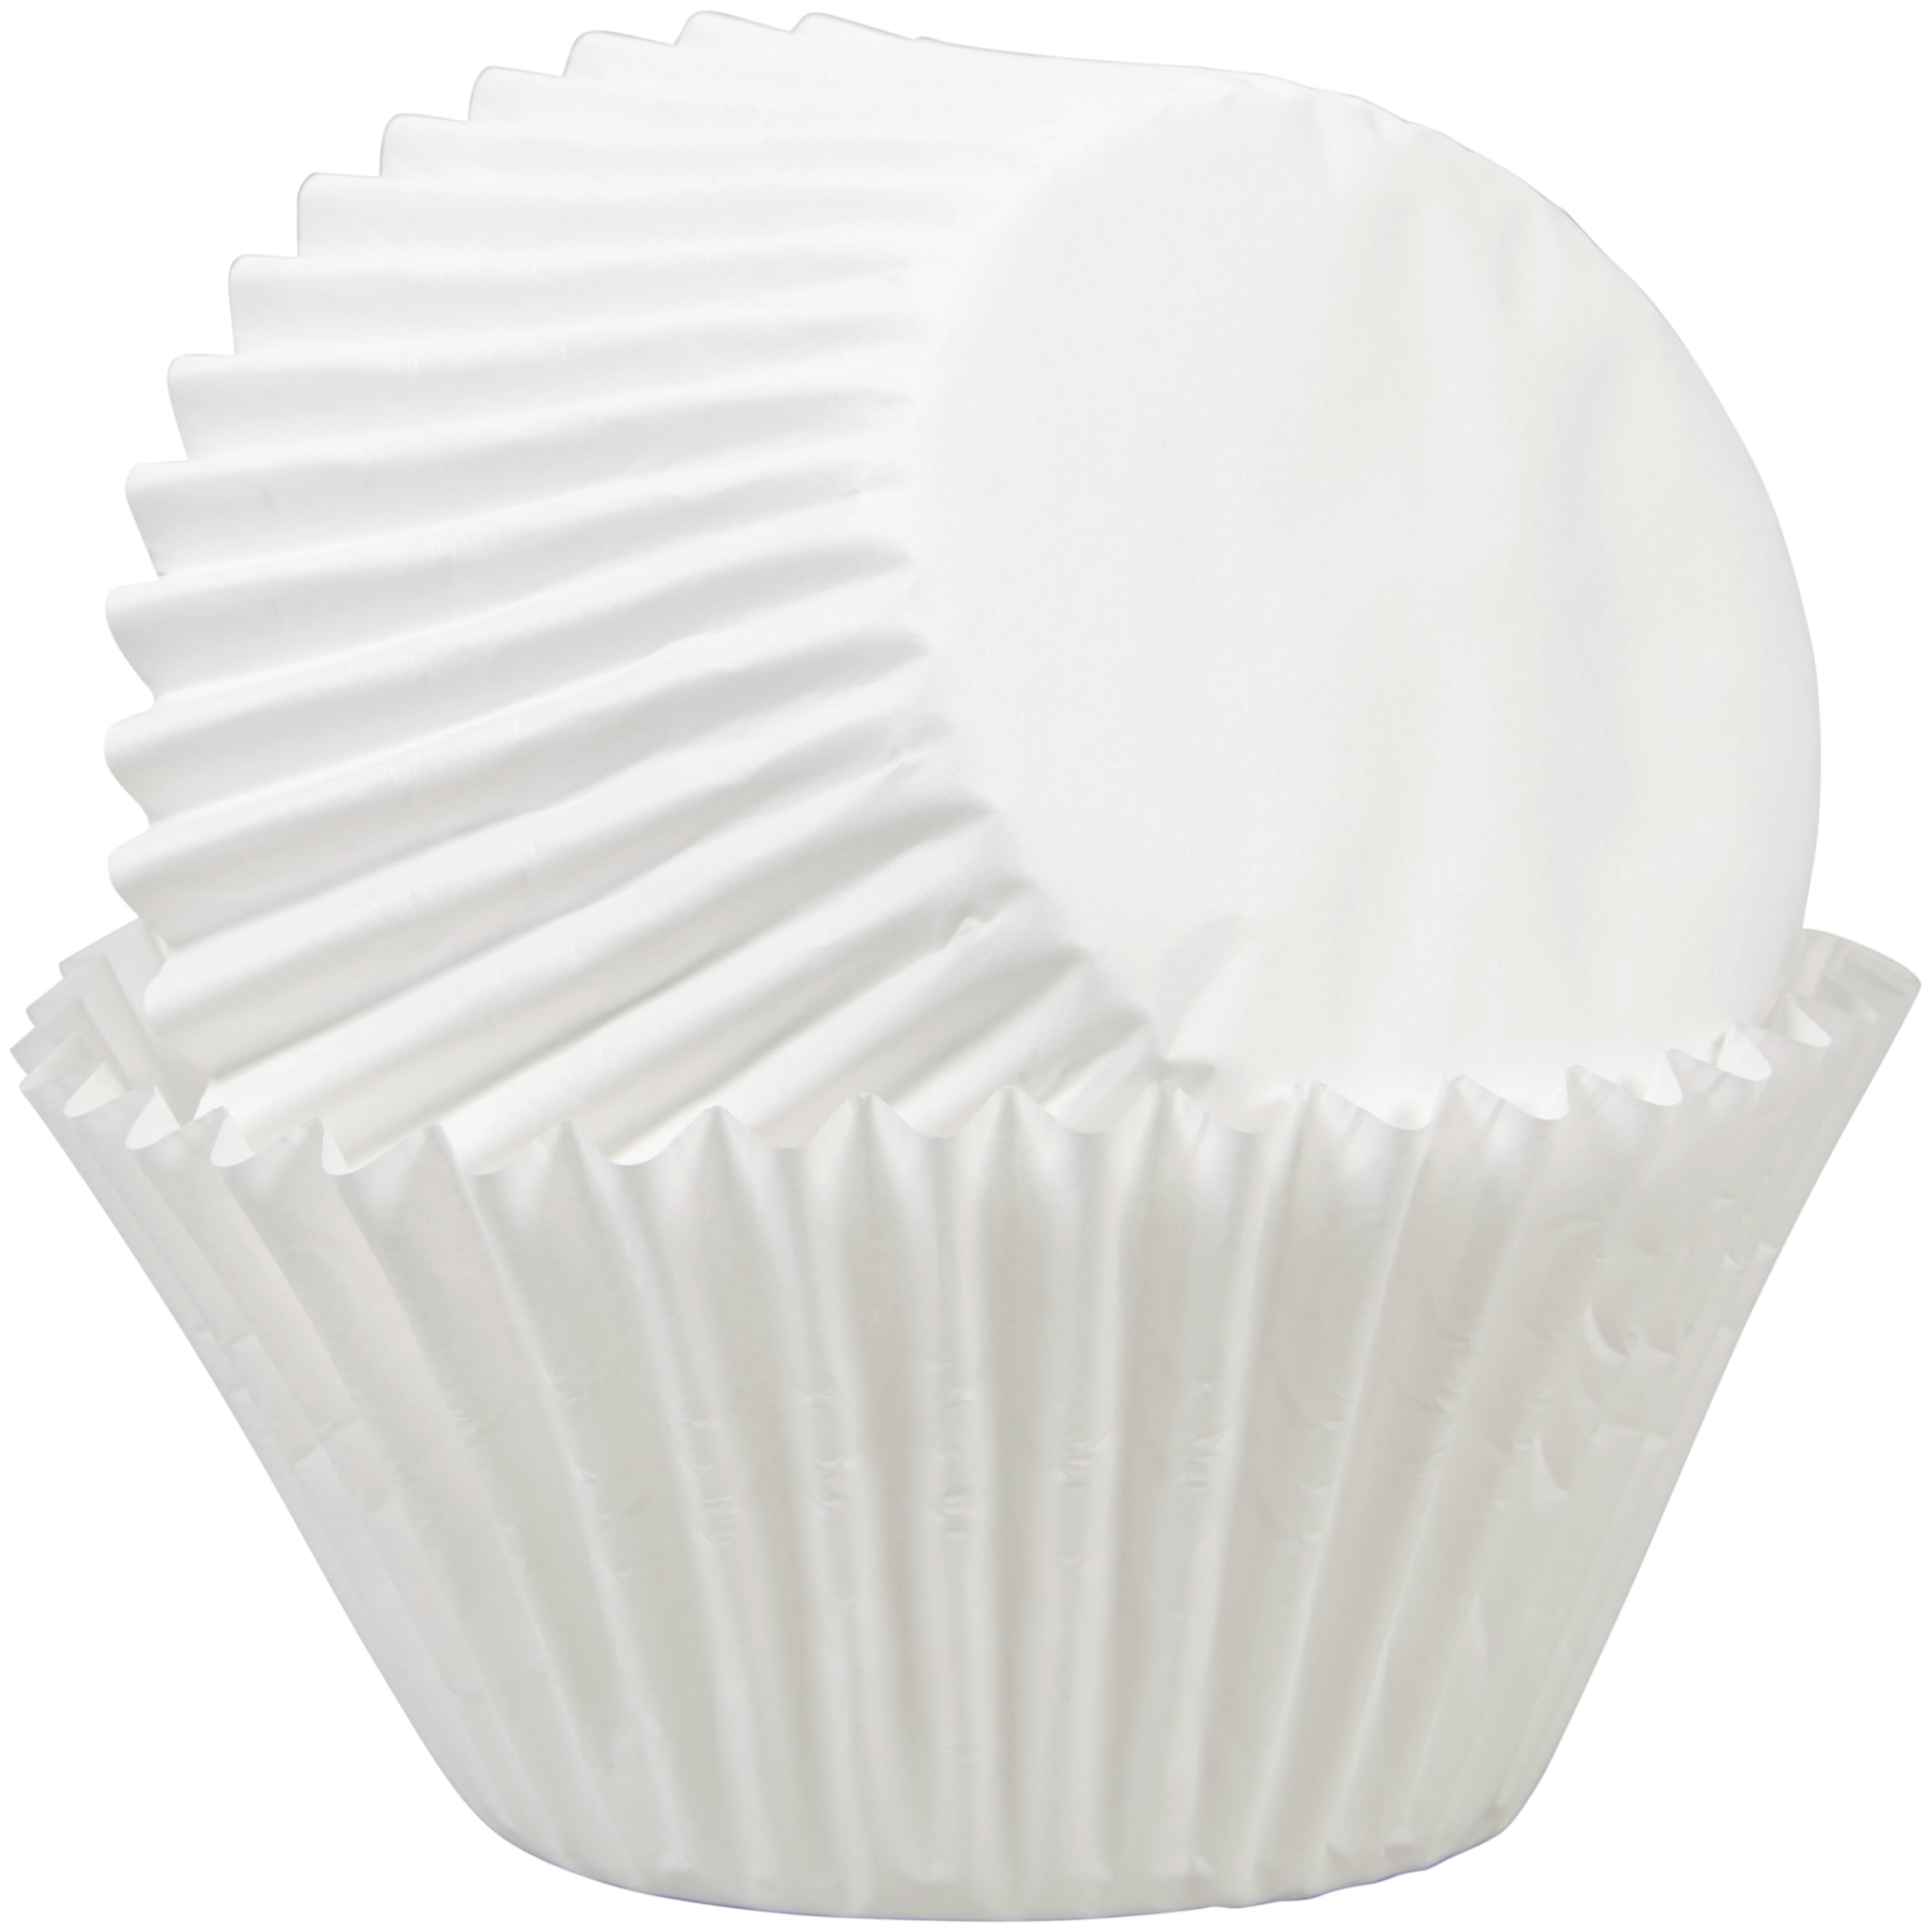 40pieces CUPCAKE CASES Mini White Foil Baking Cups 